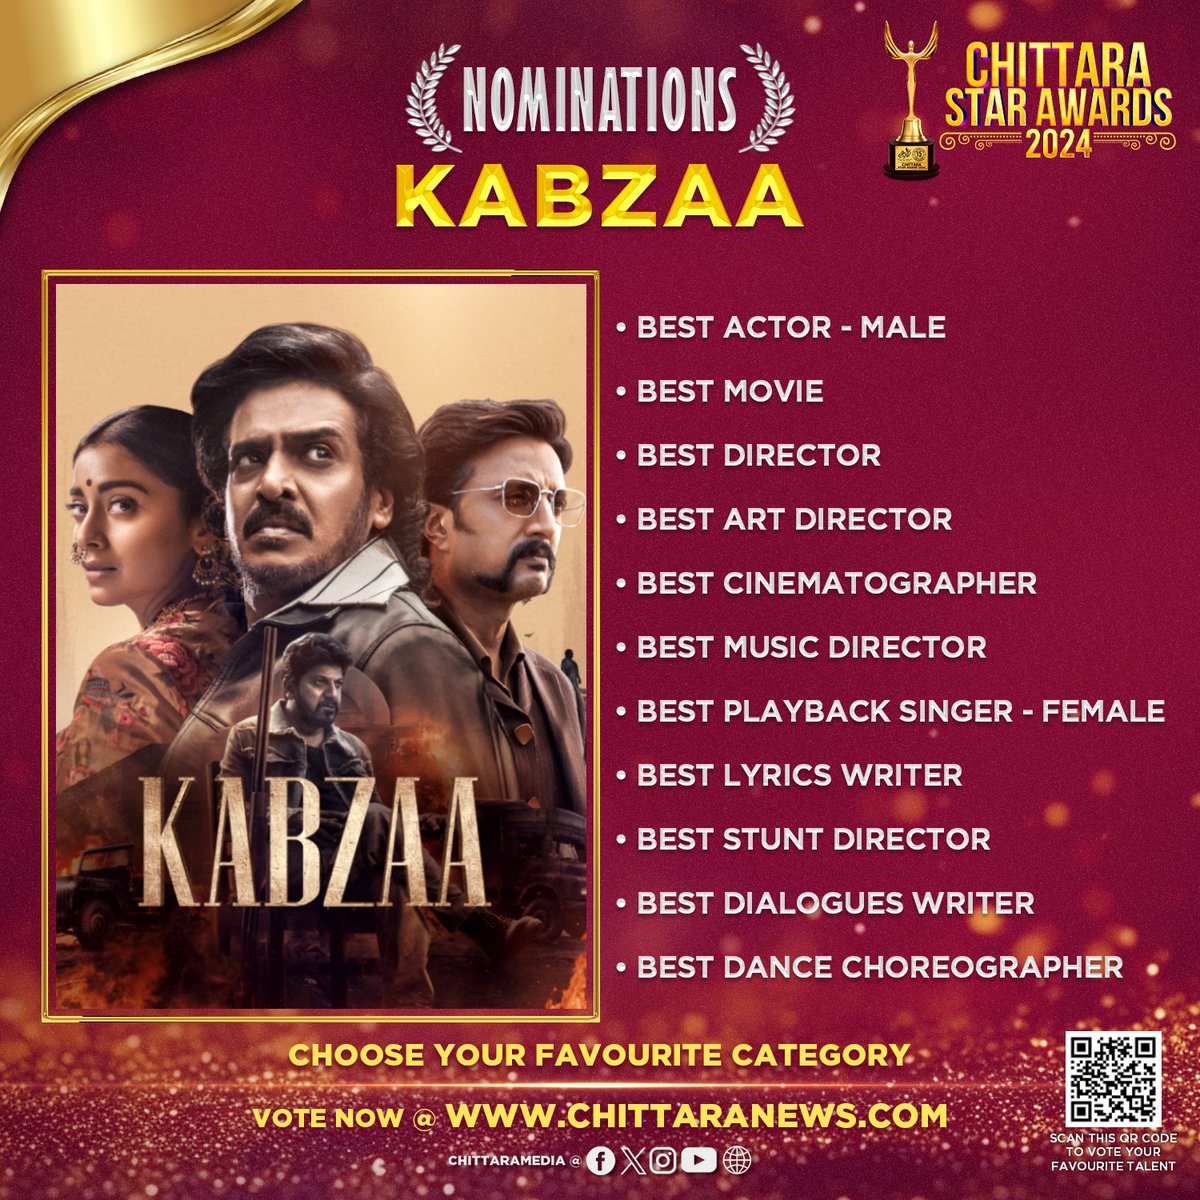 #Kabzaa 11 Nominations at #ChittaraStarAwards2024 Global Voting is Now Live : awards.chittaranews.com/poll/780/ Vote now and show your love for Team #Kabzaa #ChittaraStarAwards2024 #CSA2024 #ChittaraStarAwards @nimmaupendra @KicchaSudeep @shriya1109 @rchandru_movies